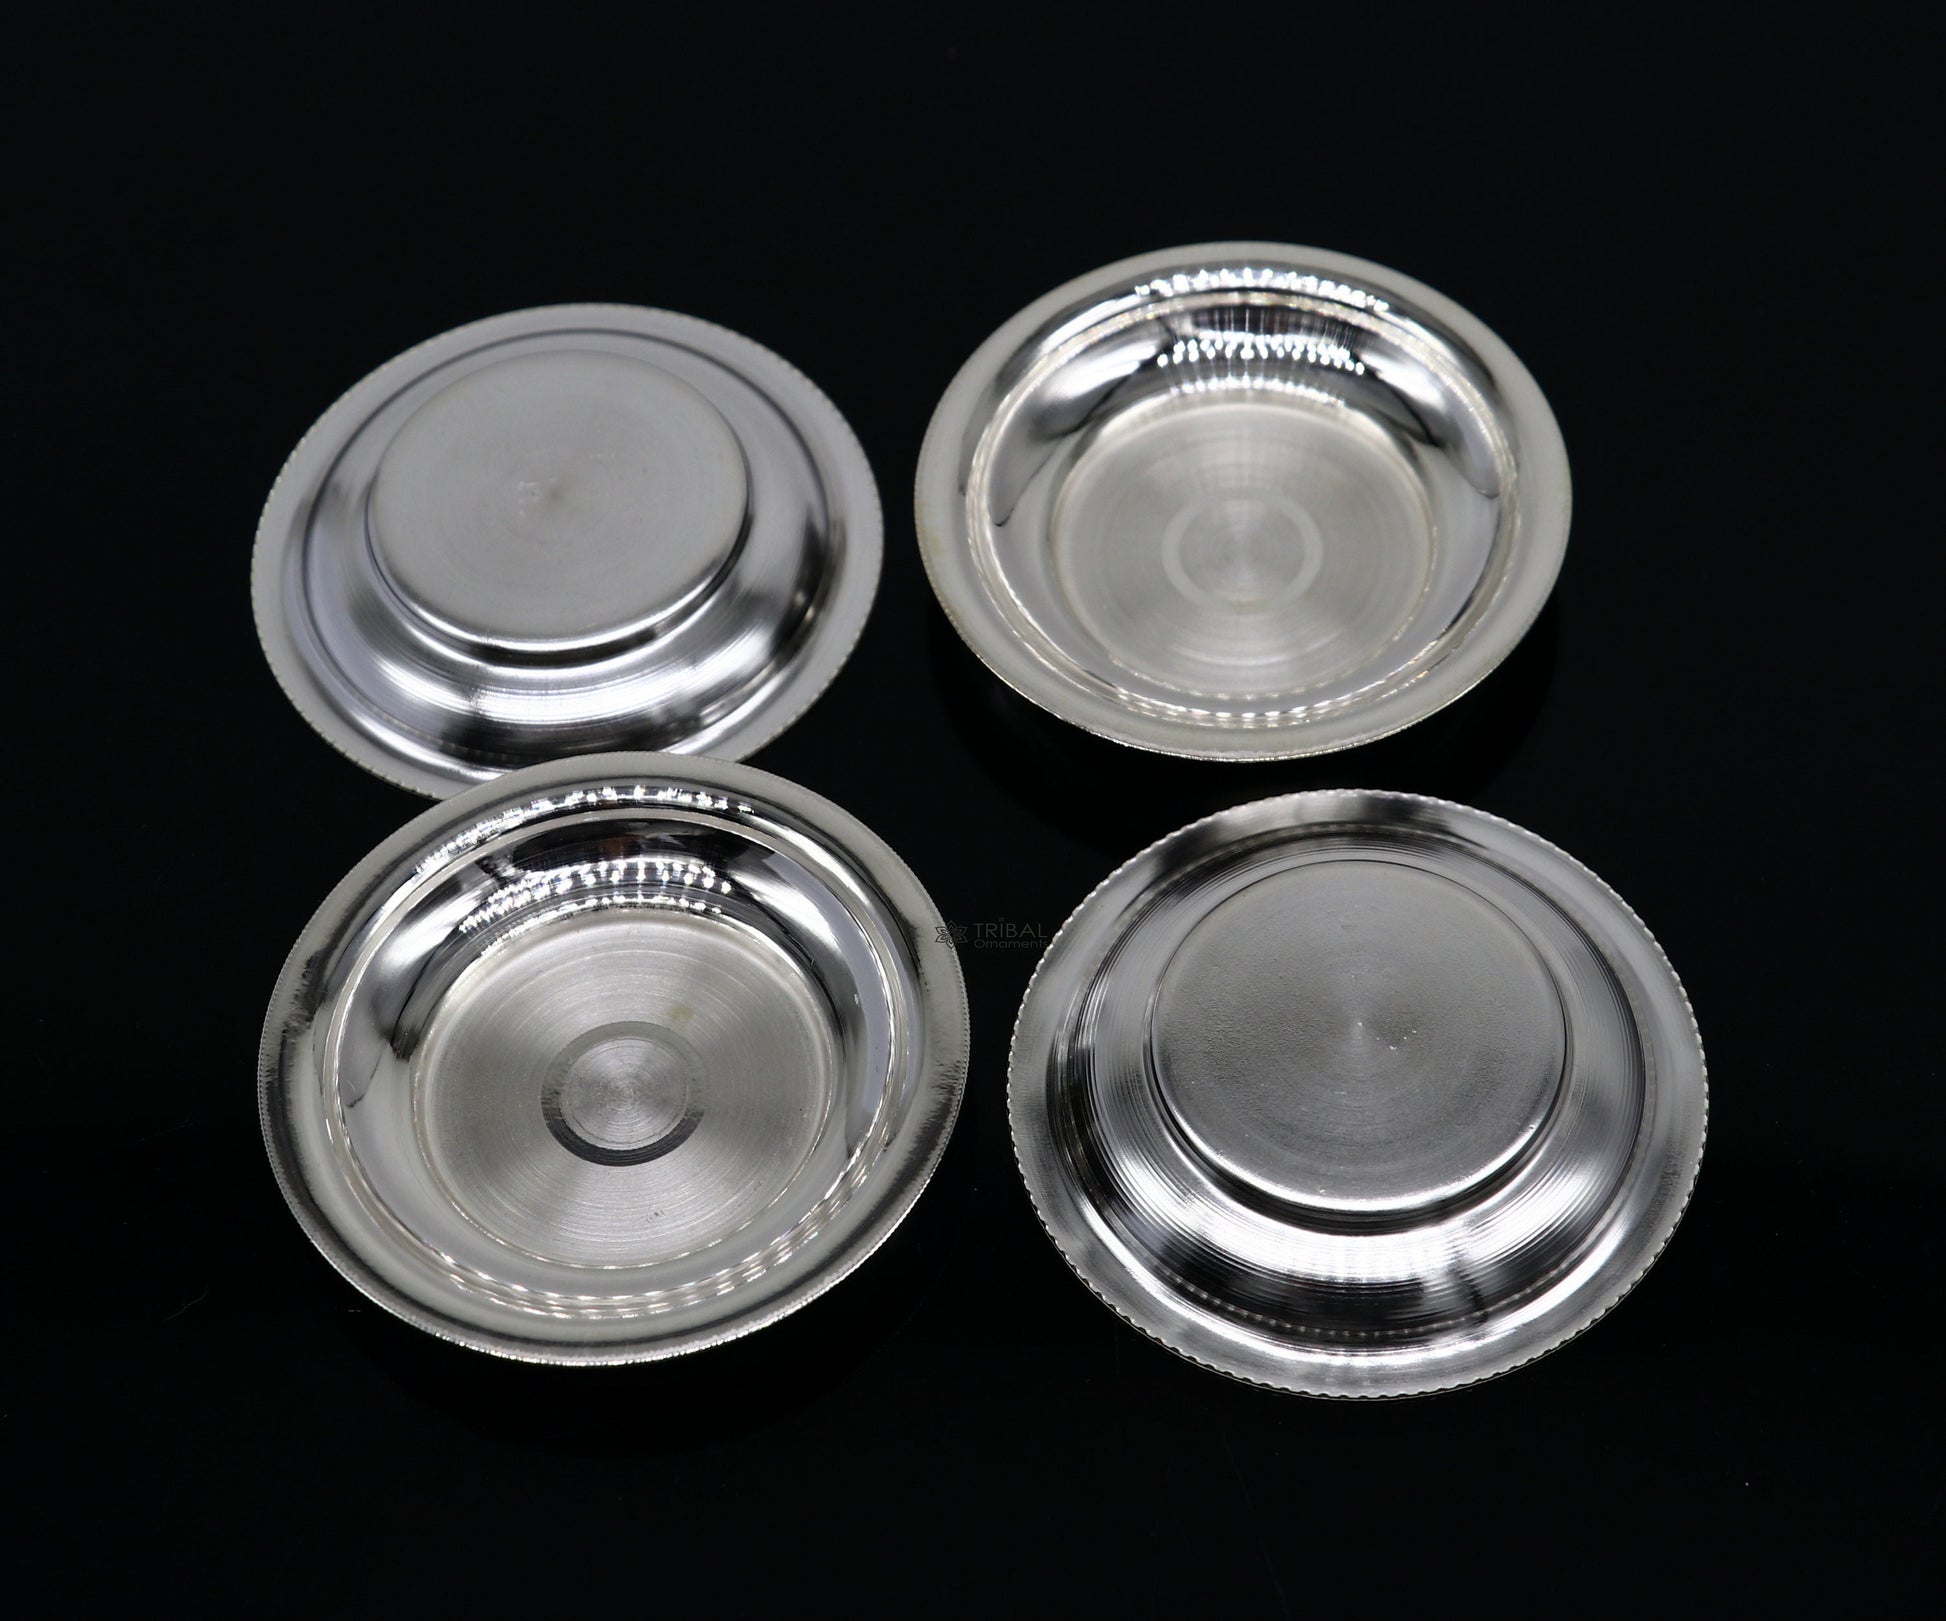 925 silver handmade silver small plate or Tilak bowl , best small tiny plate for saffron sandal or kumkum tilak dani su1134 - TRIBAL ORNAMENTS